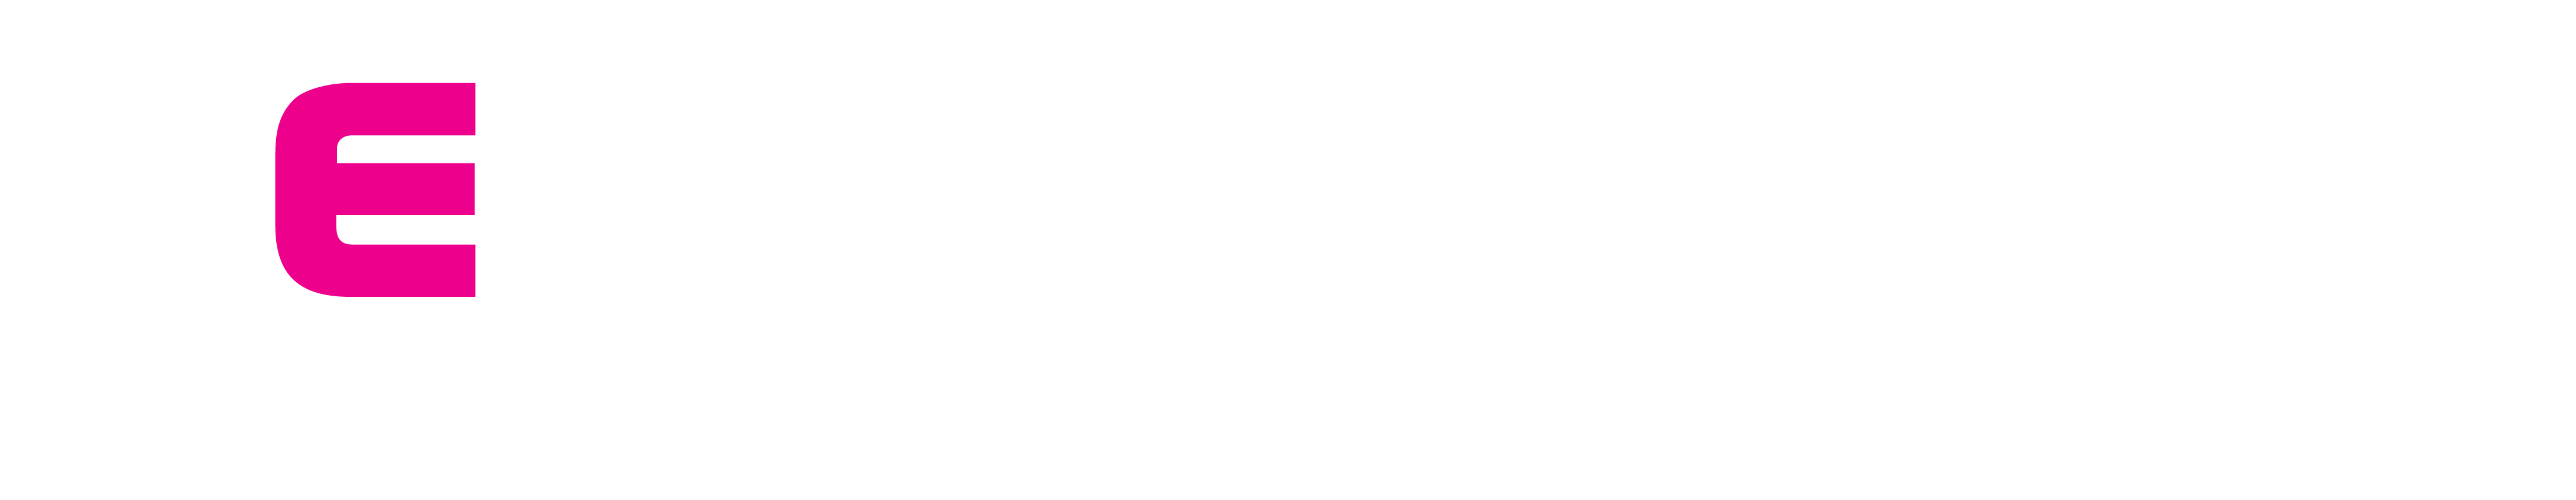 Ceramic Pro Auto Bath Club Logo